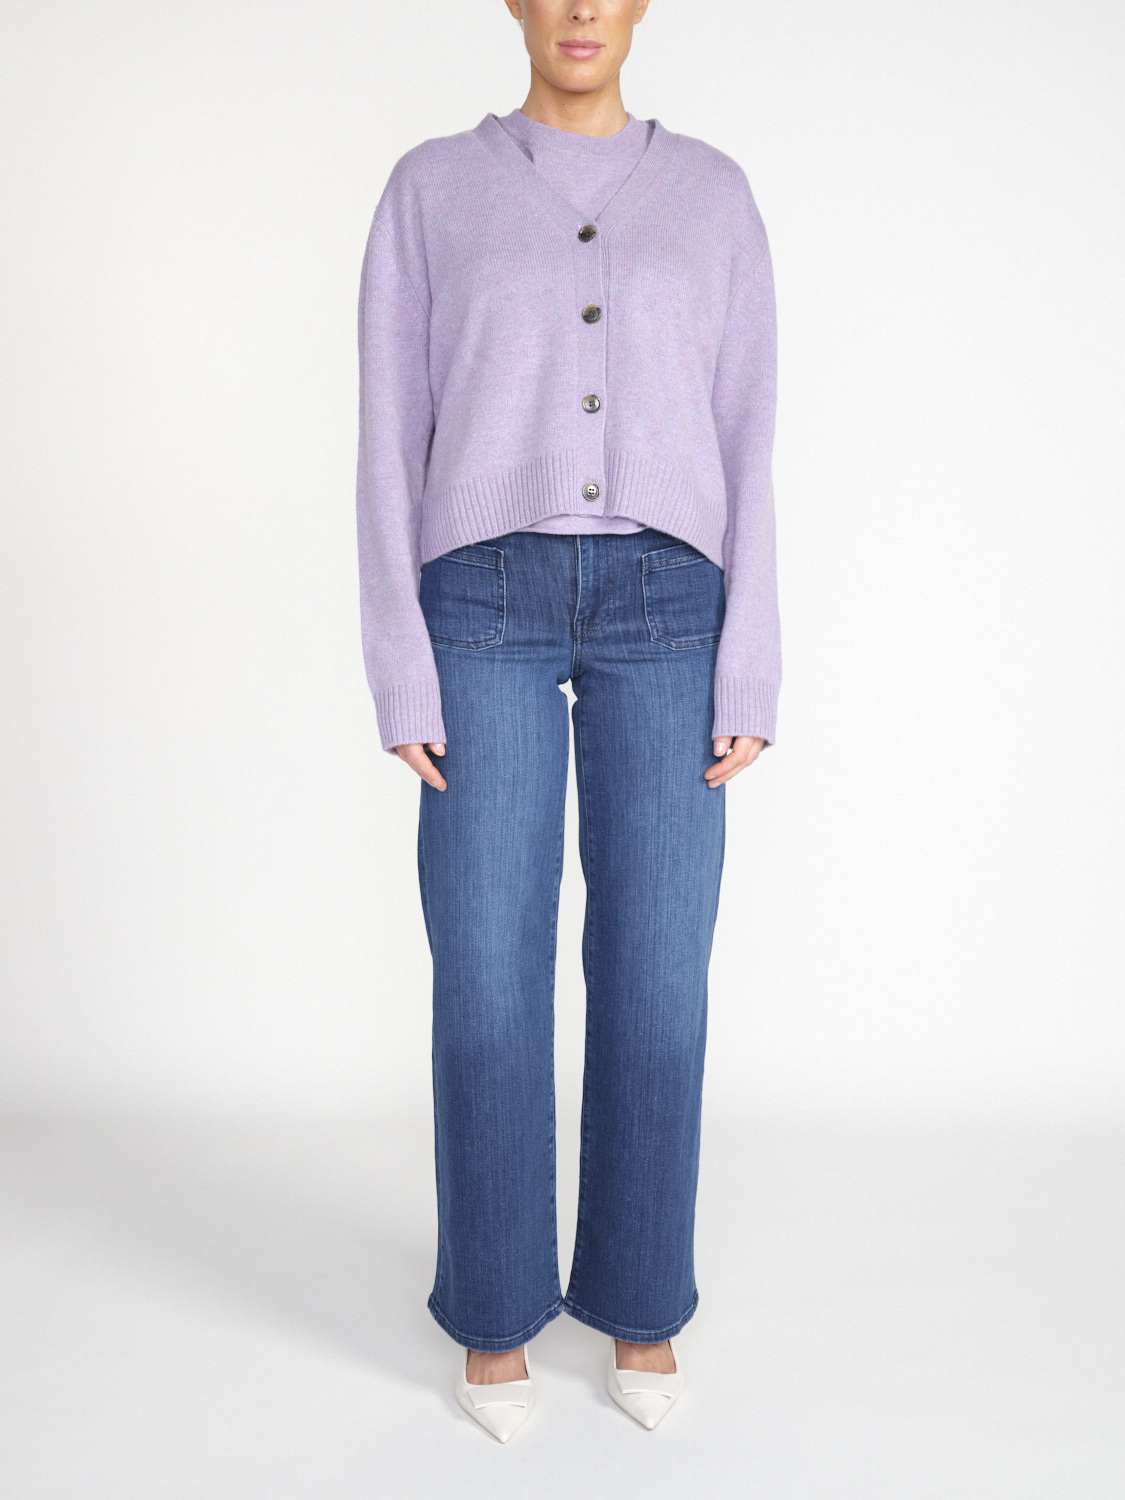 Lisa Yang Marion - Short cashmere cardigan  lila XS/S